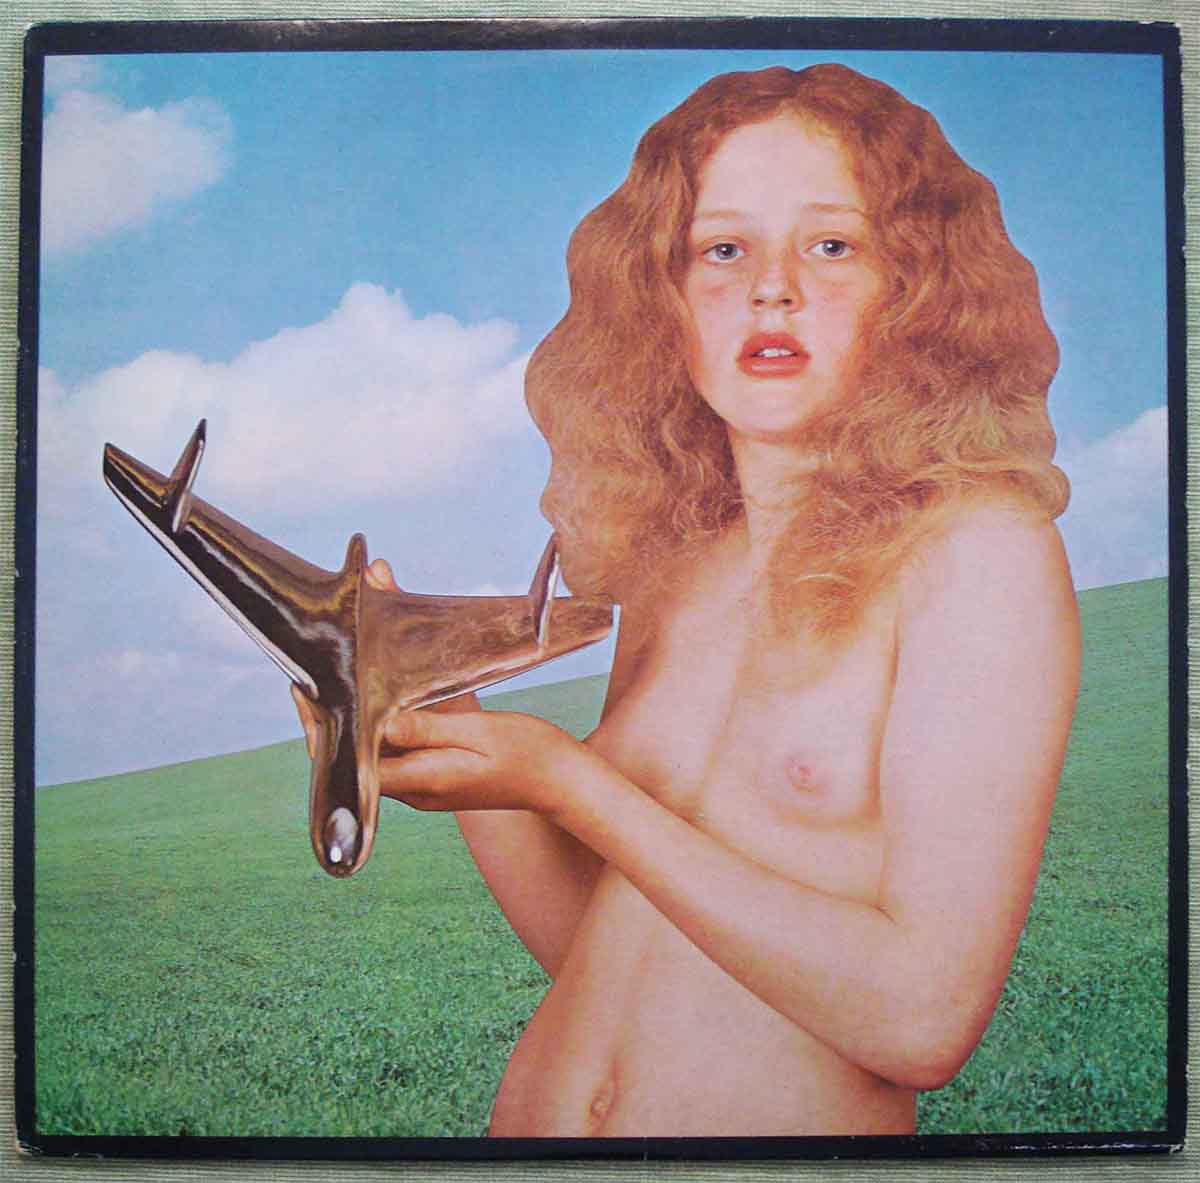 Blind Faith - Self Titled Album (1969) Vinyl LP 33rpm RS-1-3016